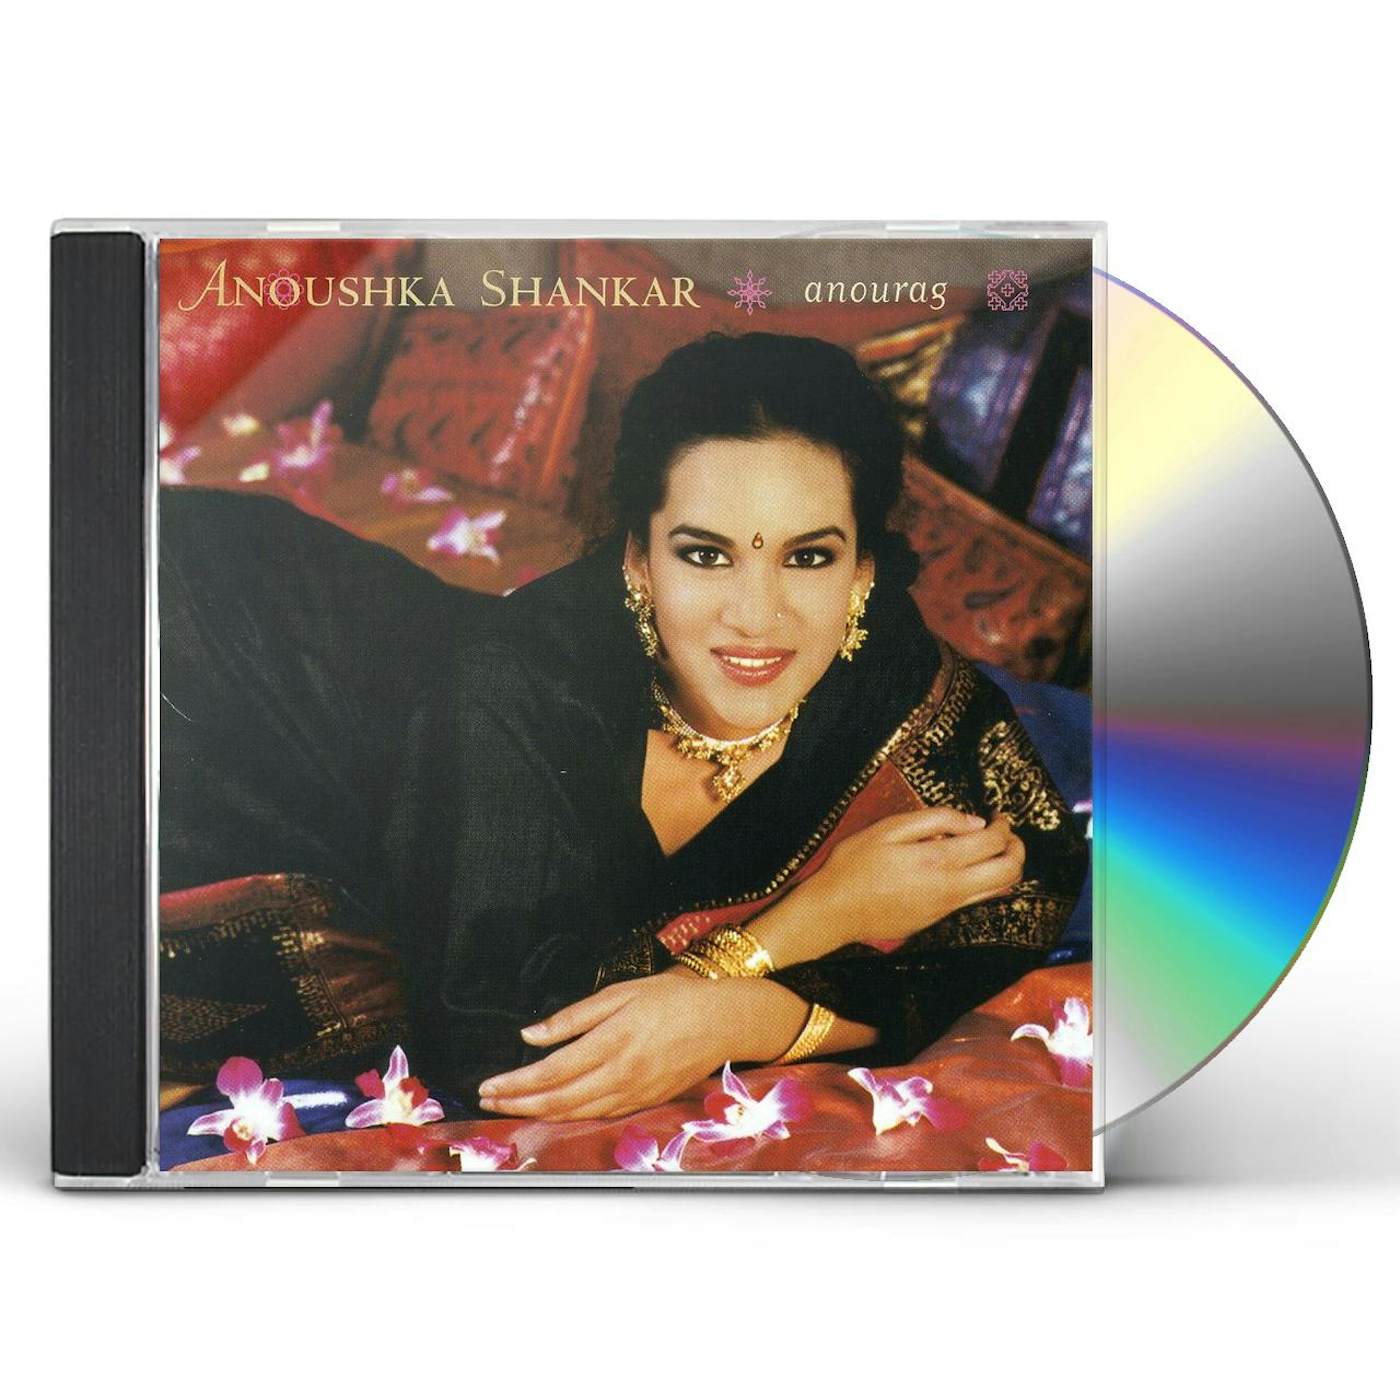 Anoushka Shankar ANOURAG CD